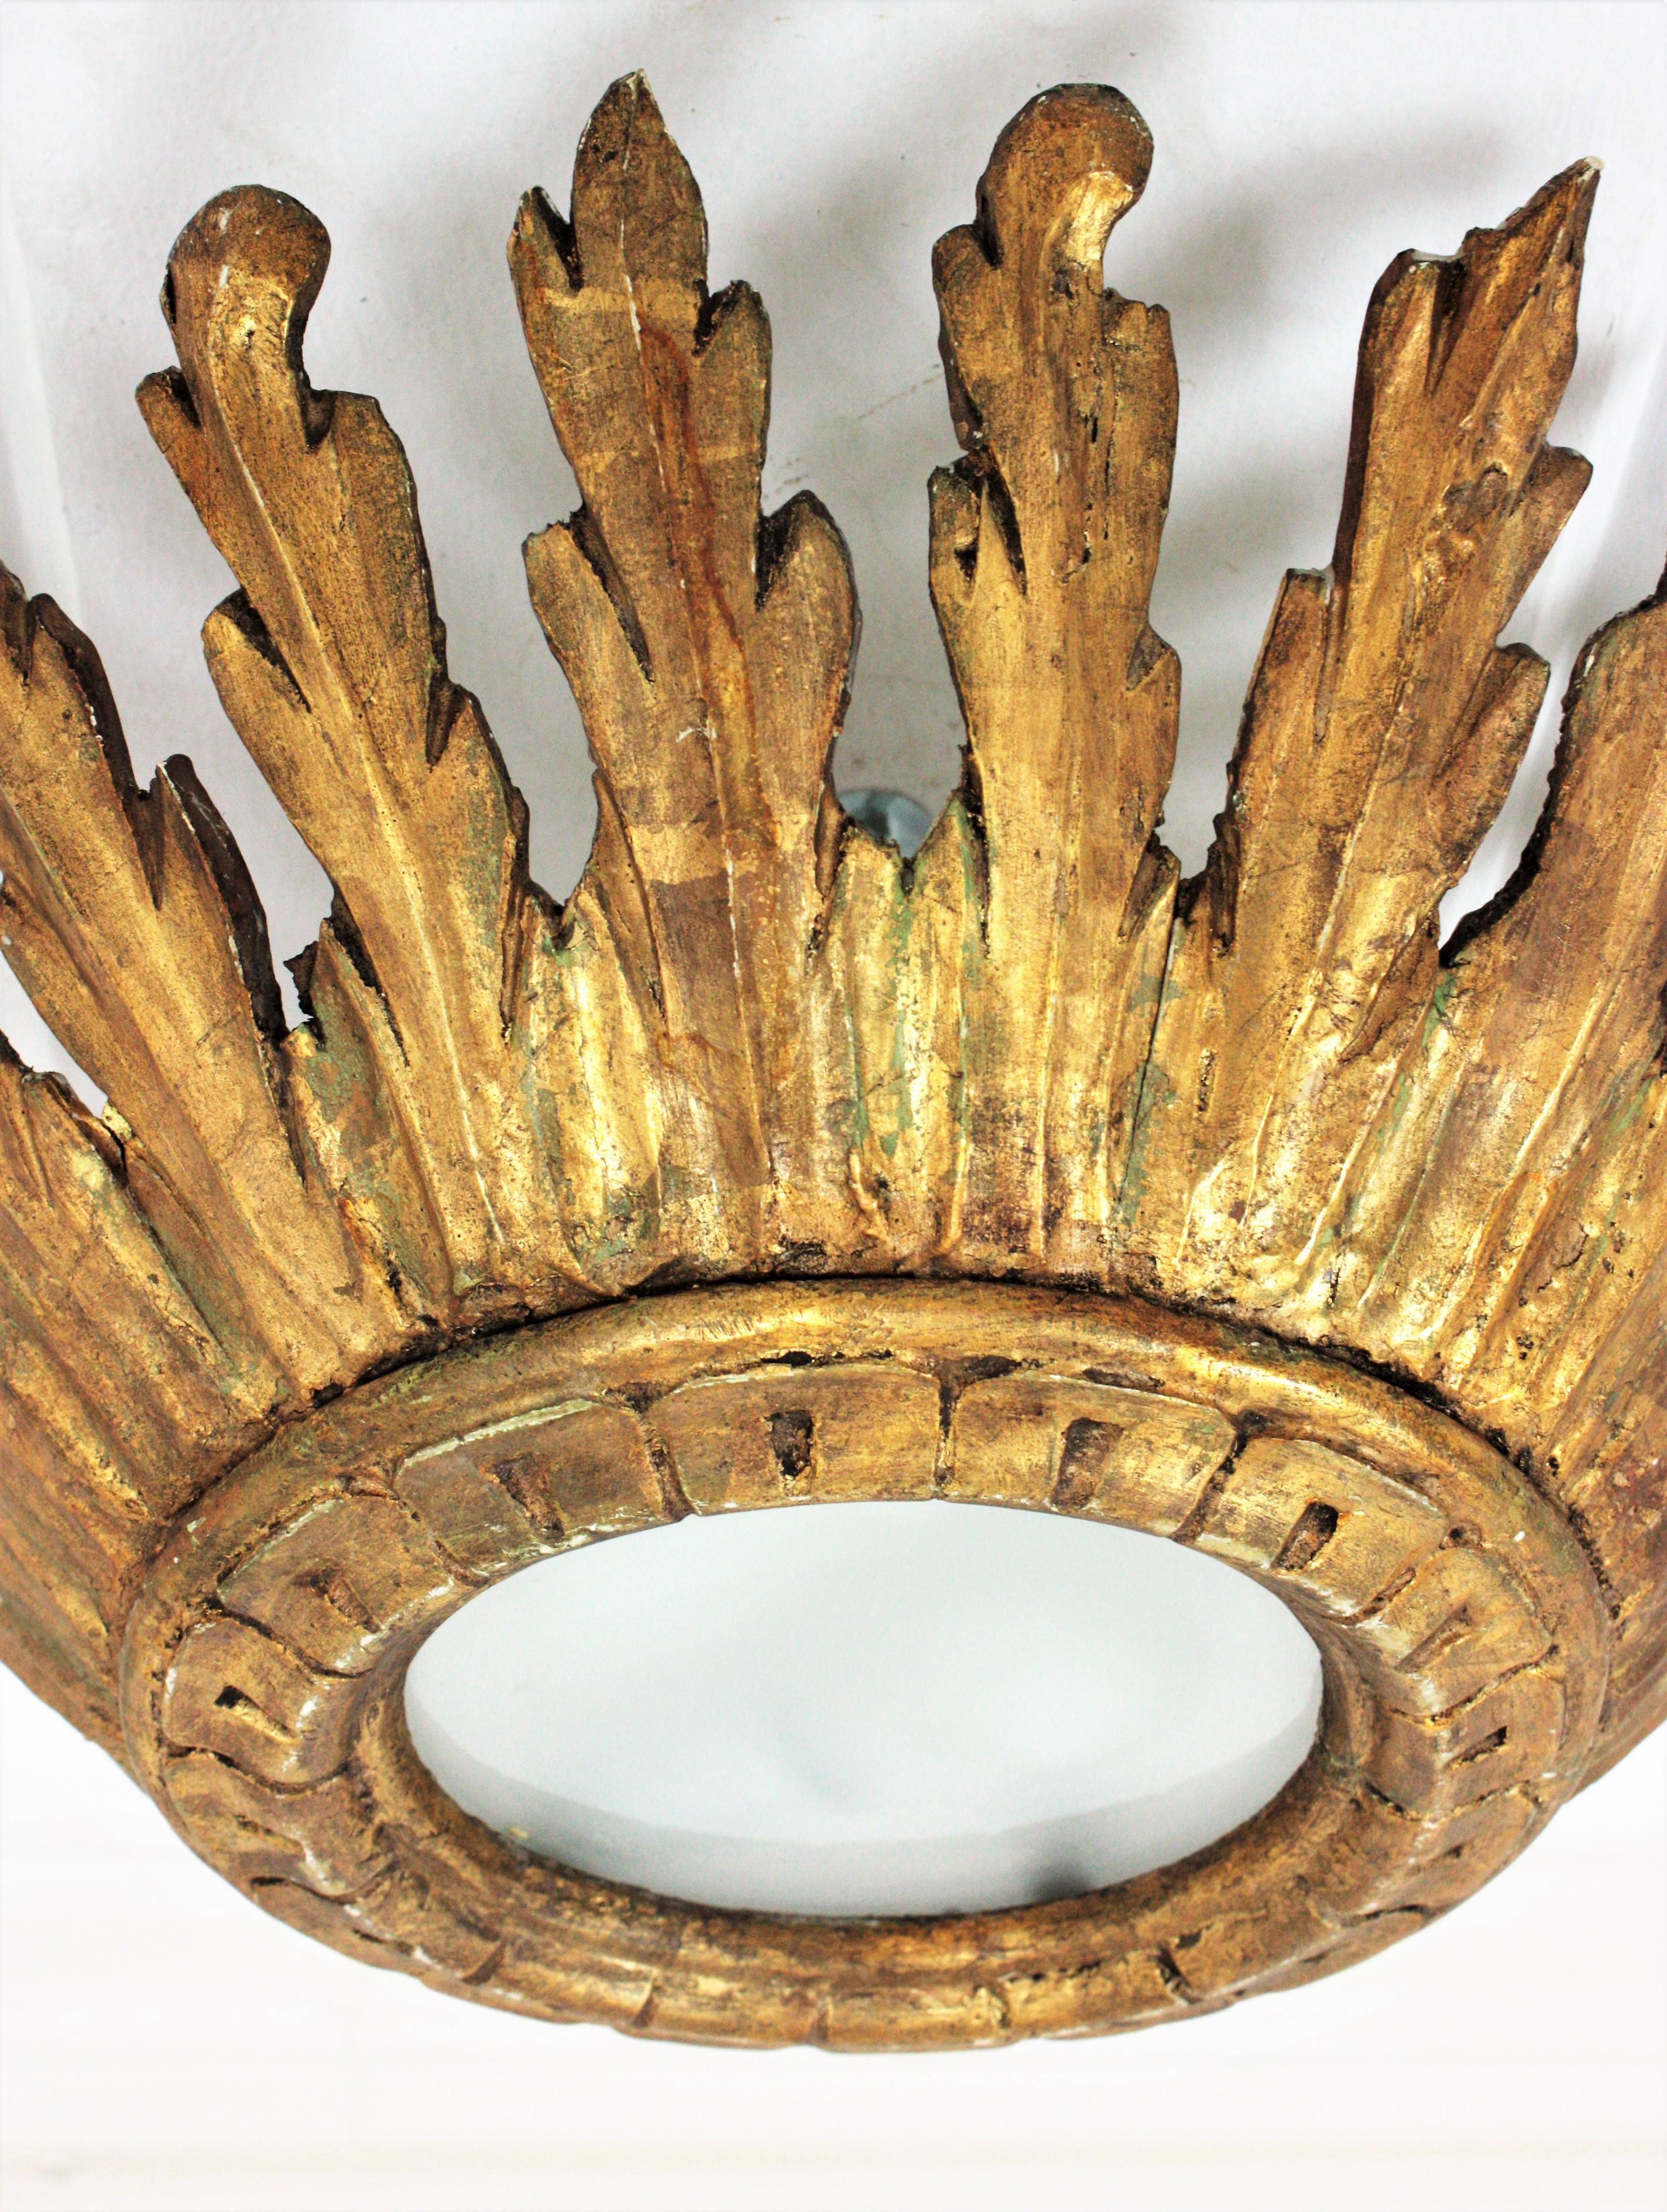 Gold Leaf Sunburst Crown Ceiling Flush Mount Light Fixture in Giltwood, Spanish Baroque For Sale